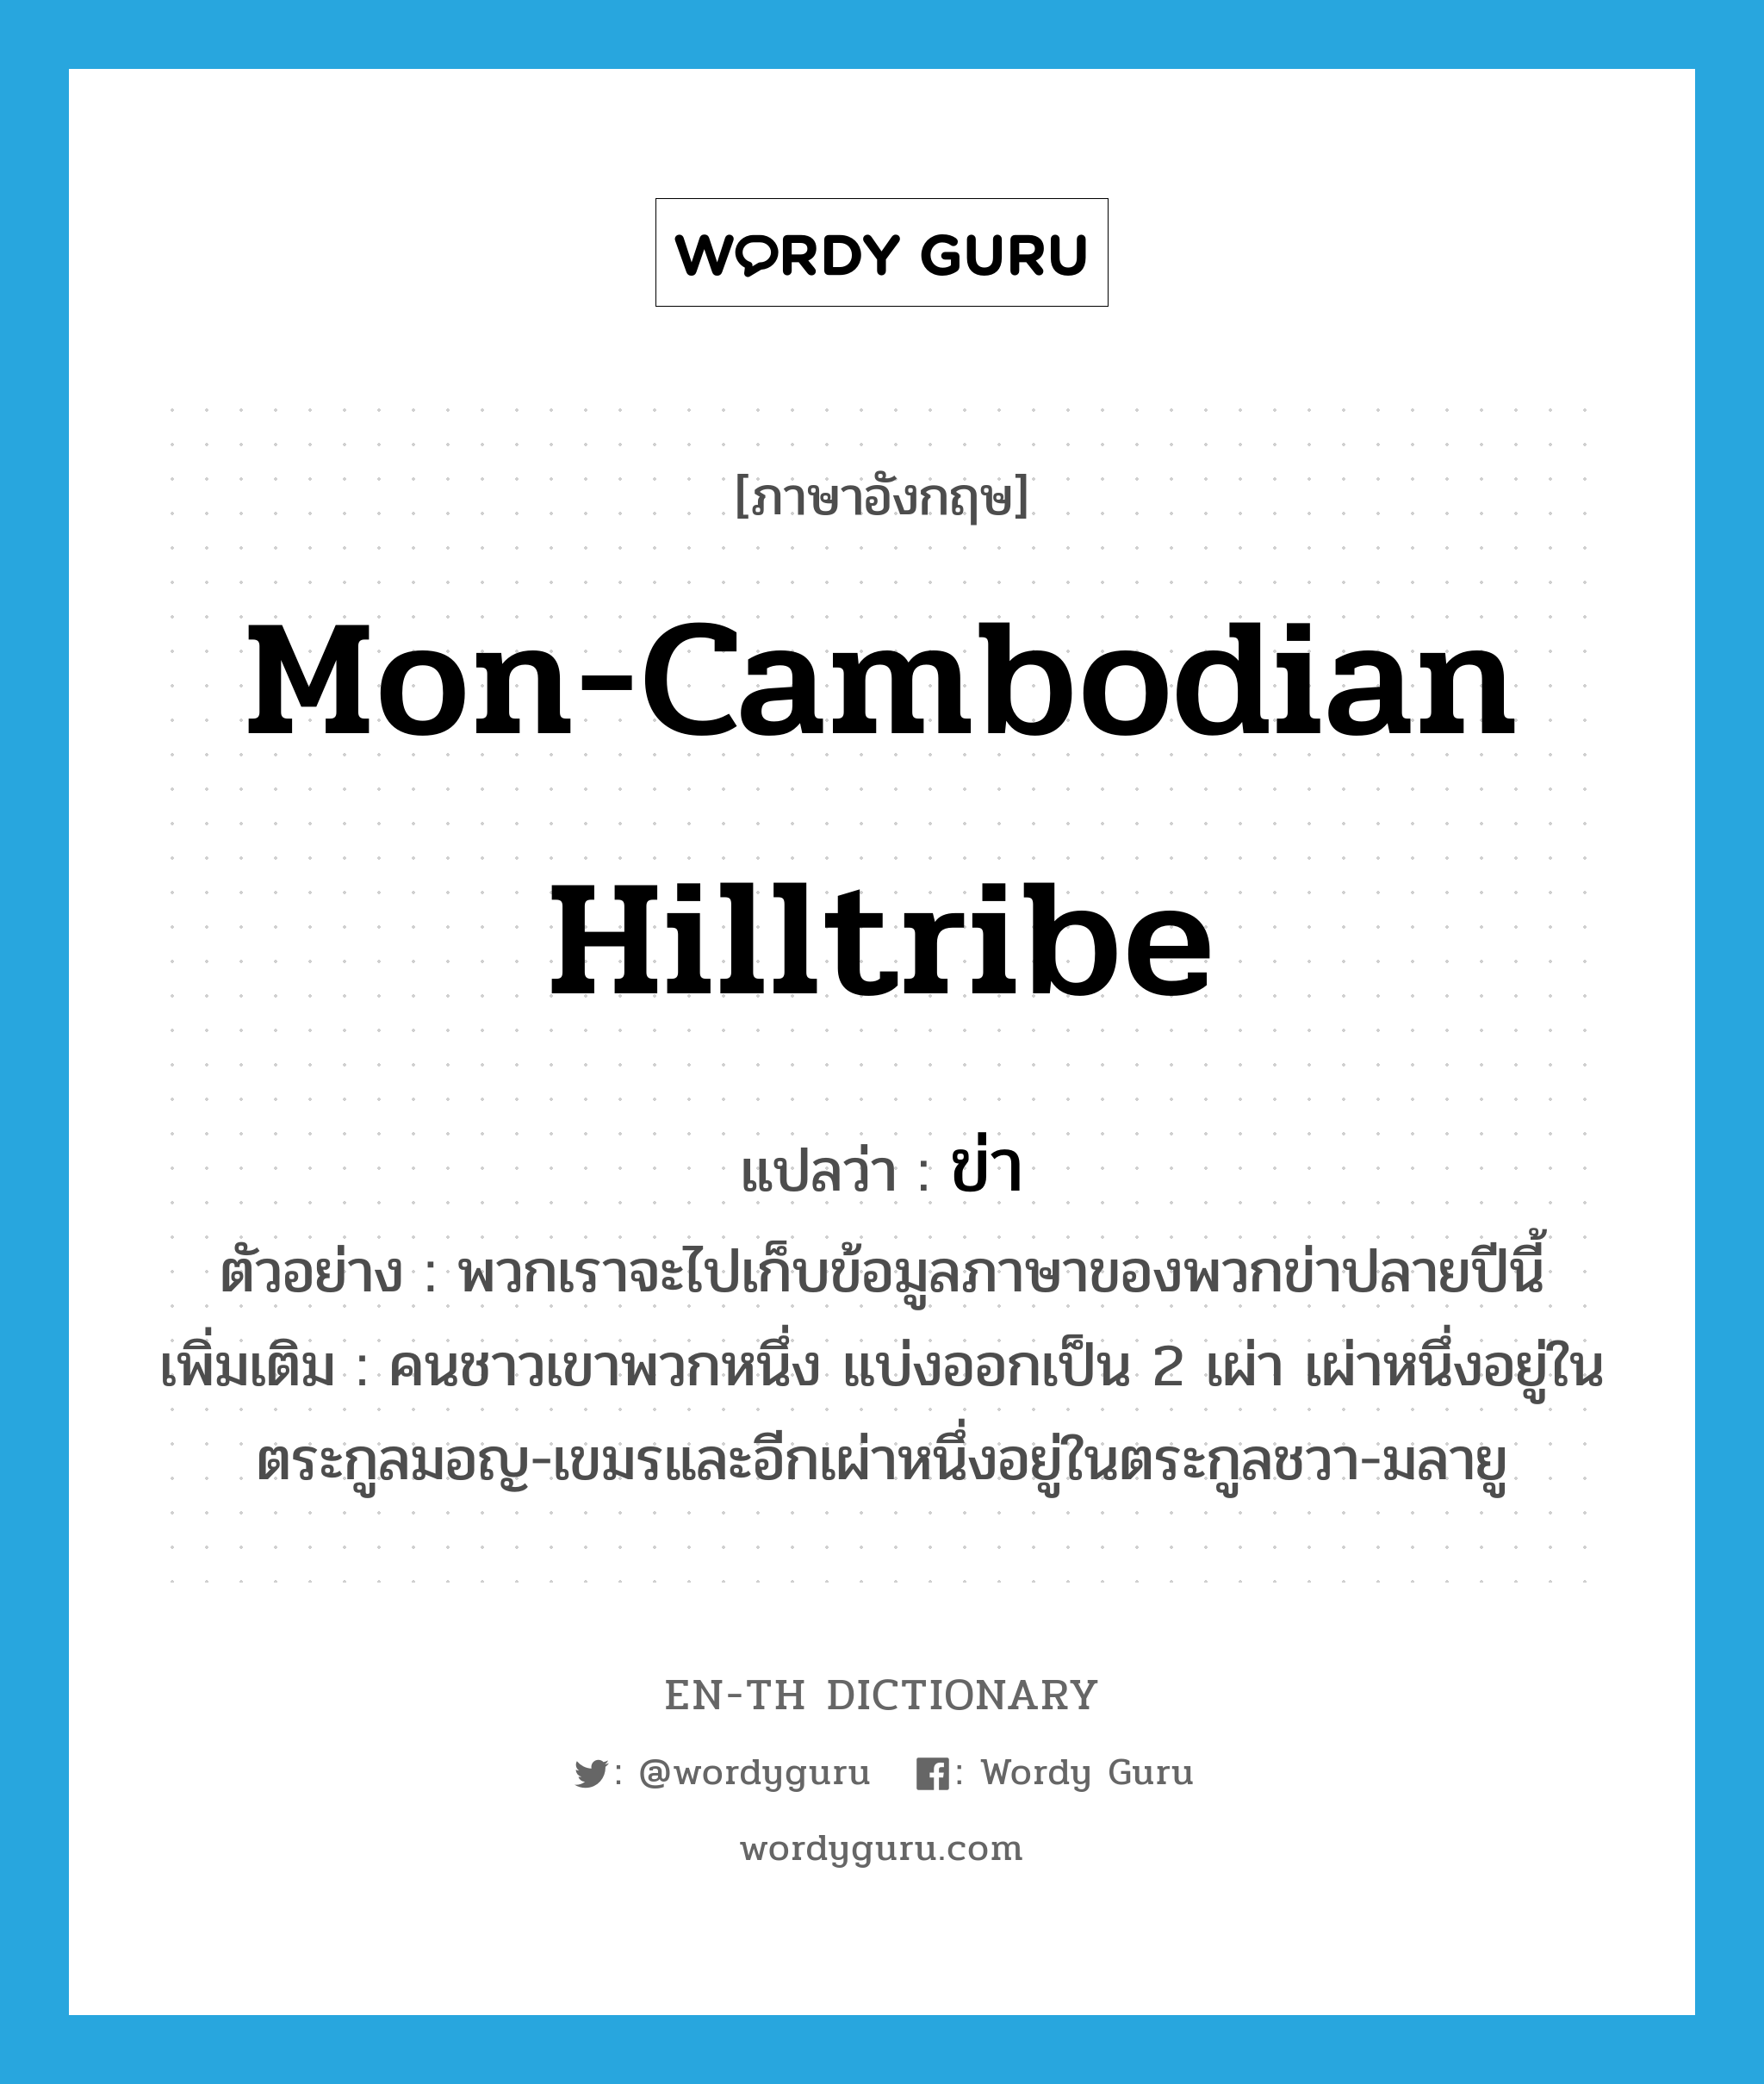 Mon-Cambodian hilltribe แปลว่า?, คำศัพท์ภาษาอังกฤษ Mon-Cambodian hilltribe แปลว่า ข่า ประเภท N ตัวอย่าง พวกเราจะไปเก็บข้อมูลภาษาของพวกข่าปลายปีนี้ เพิ่มเติม คนชาวเขาพวกหนึ่ง แบ่งออกเป็น 2 เผ่า เผ่าหนึ่งอยู่ในตระกูลมอญ-เขมรและอีกเผ่าหนึ่งอยู่ในตระกูลชวา-มลายู หมวด N